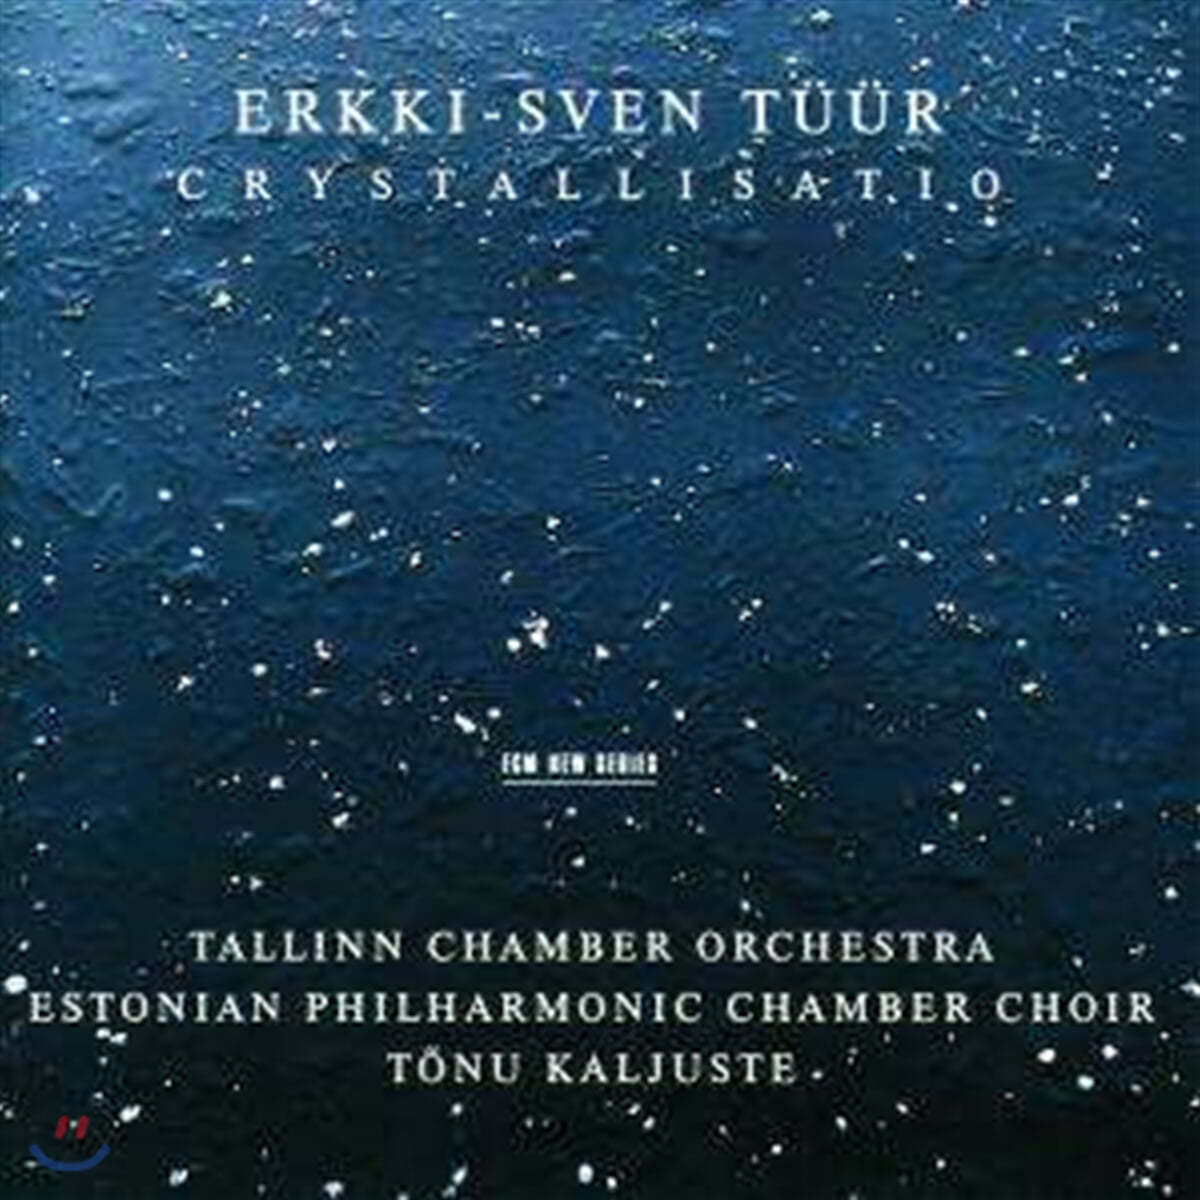 Tonu Kaljuste 에르키스벤 튀르: 90년대 초 작품 모음곡집 (Erkki-Sven Tuur: Crystallisatio)